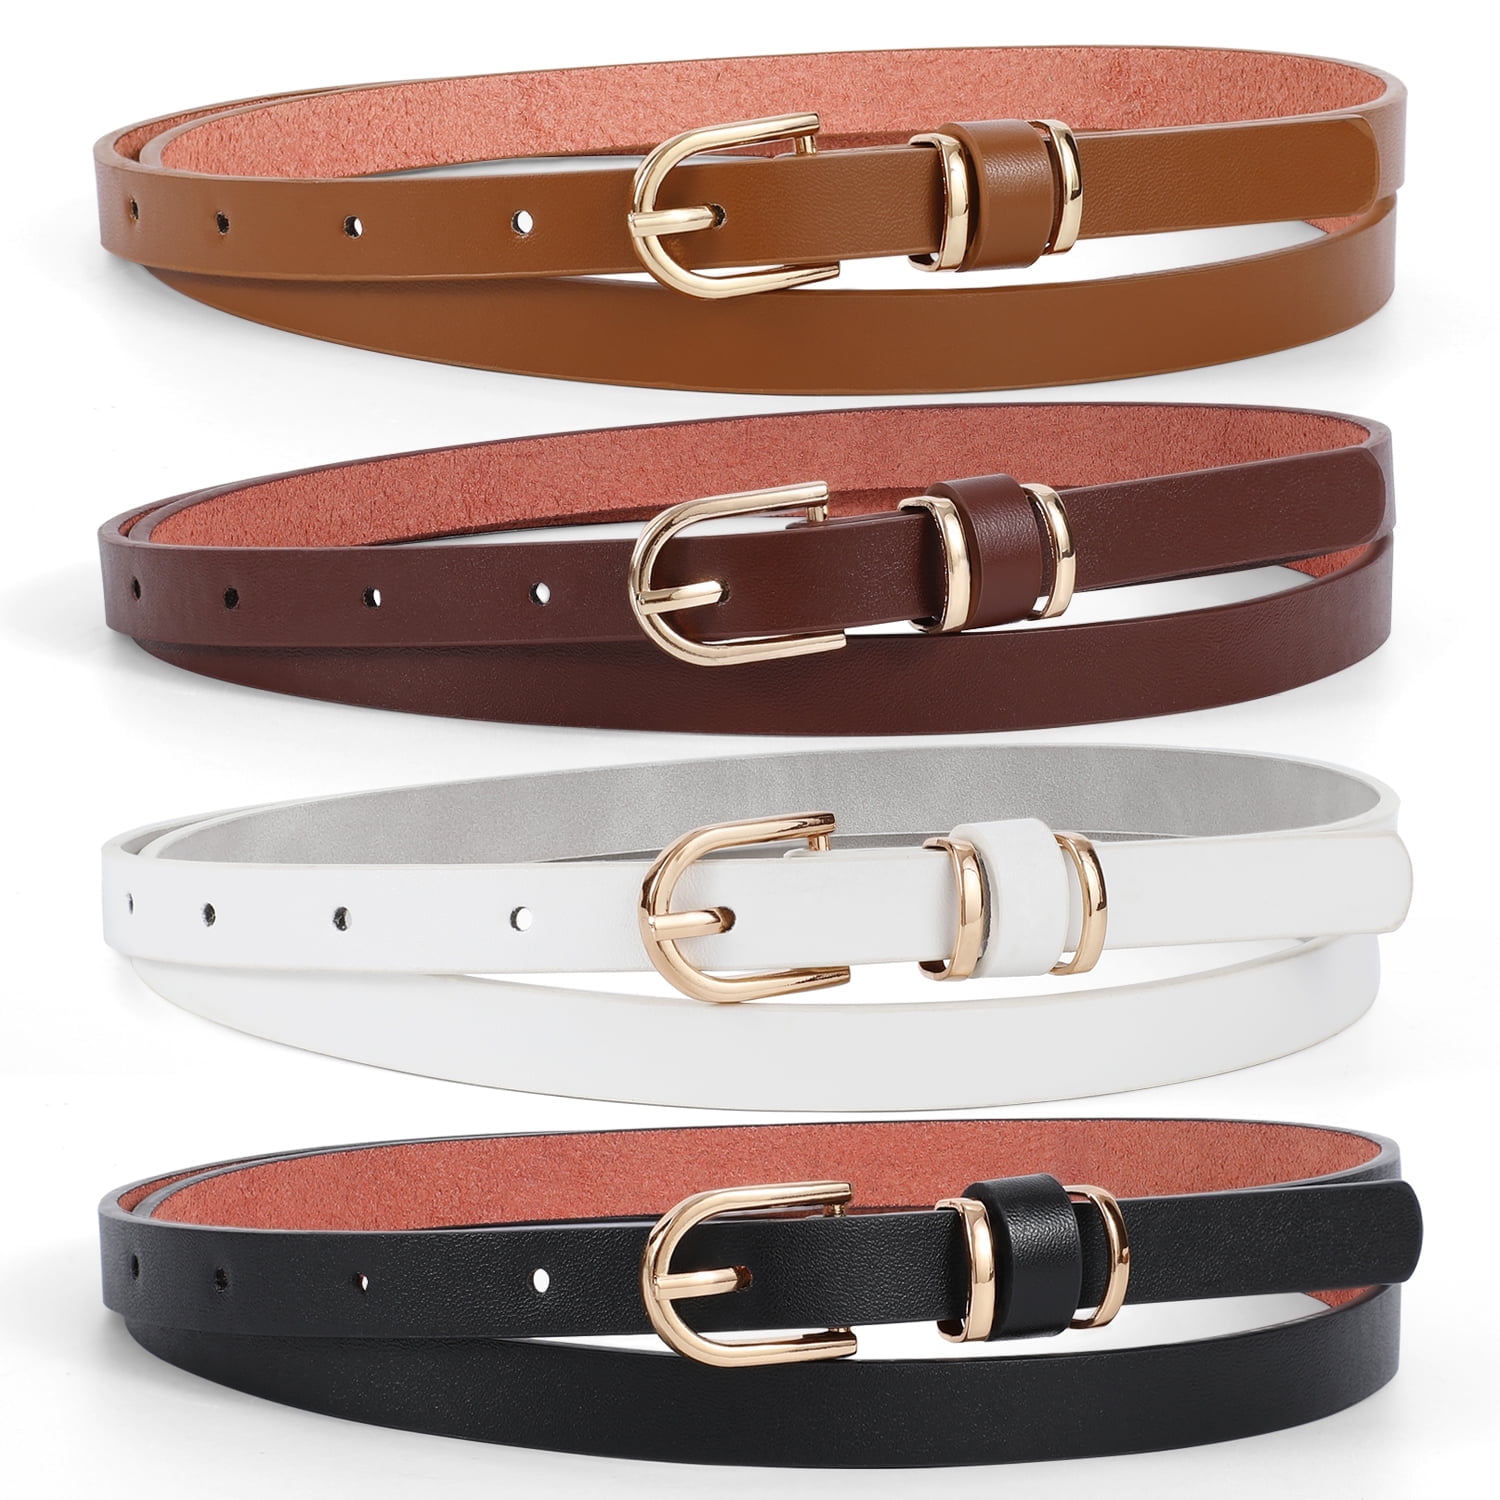 SUOSDEY Women's Fashion Soft Leather Belt